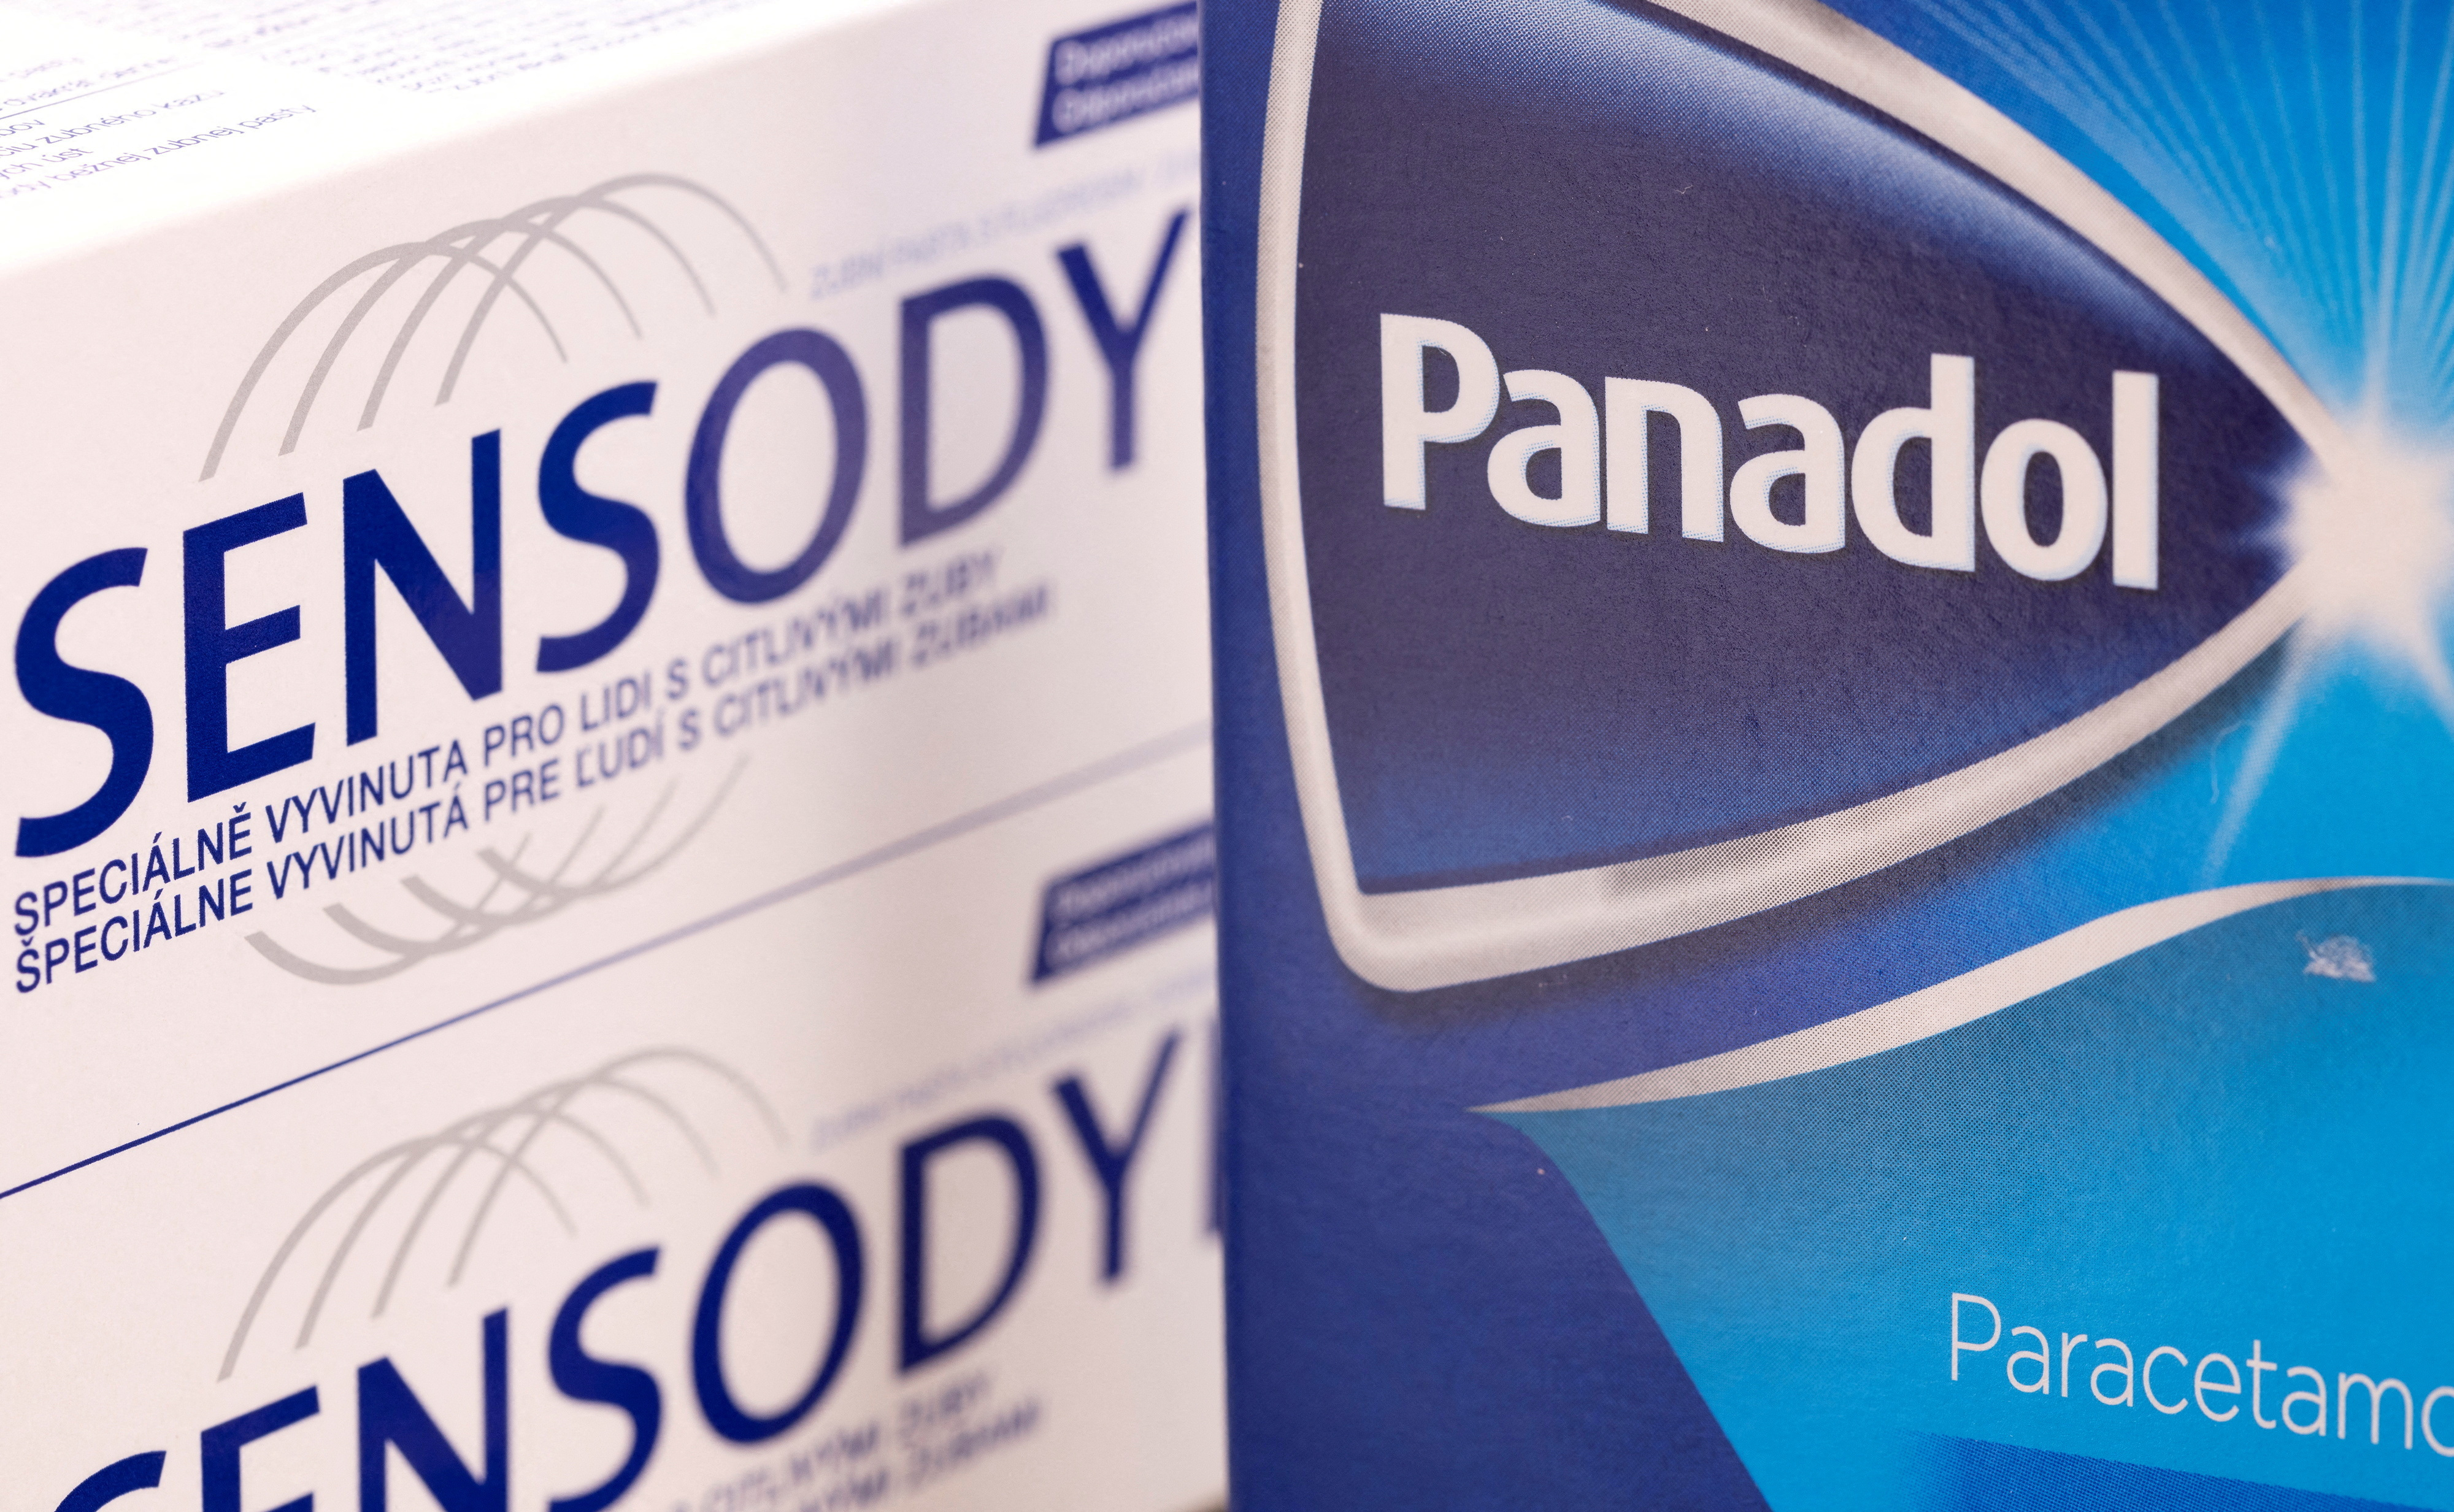 FILE PHOTO: Illustration of Sensodyne toothpaste and Panadol tablets